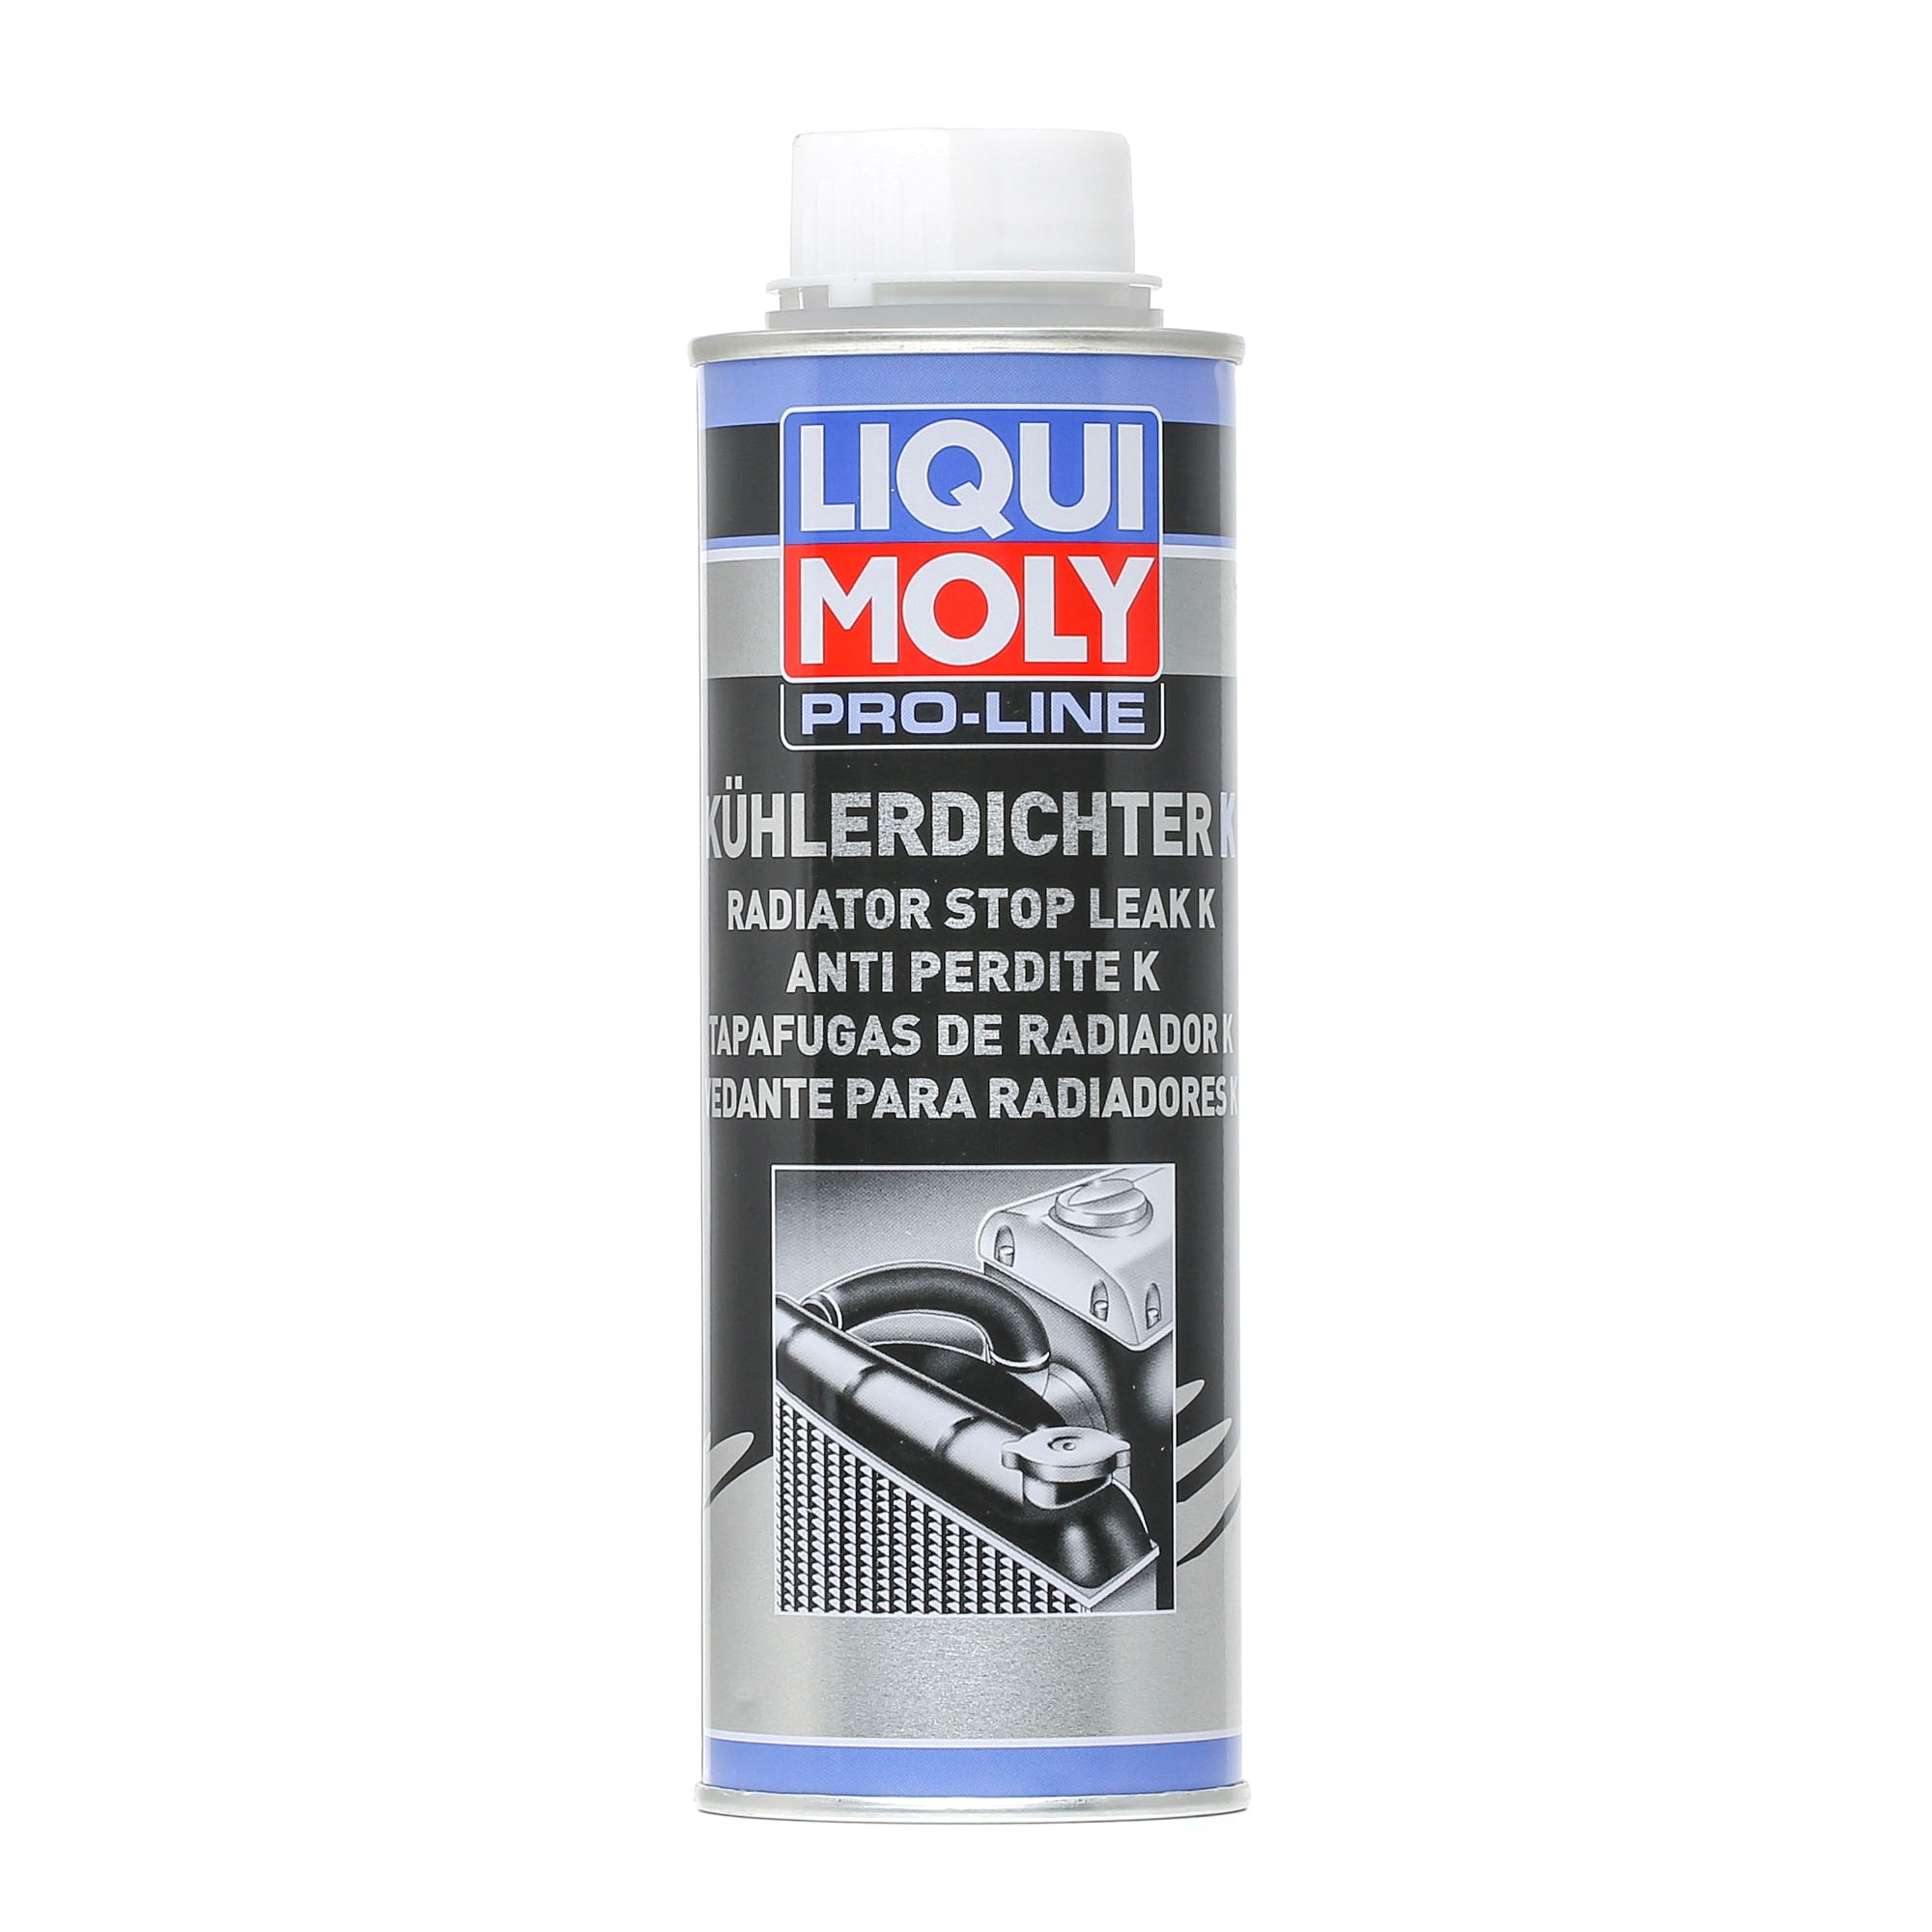 LIQUI MOLY 5178 neu Motorkühlsystem Ersatzteile online kaufen